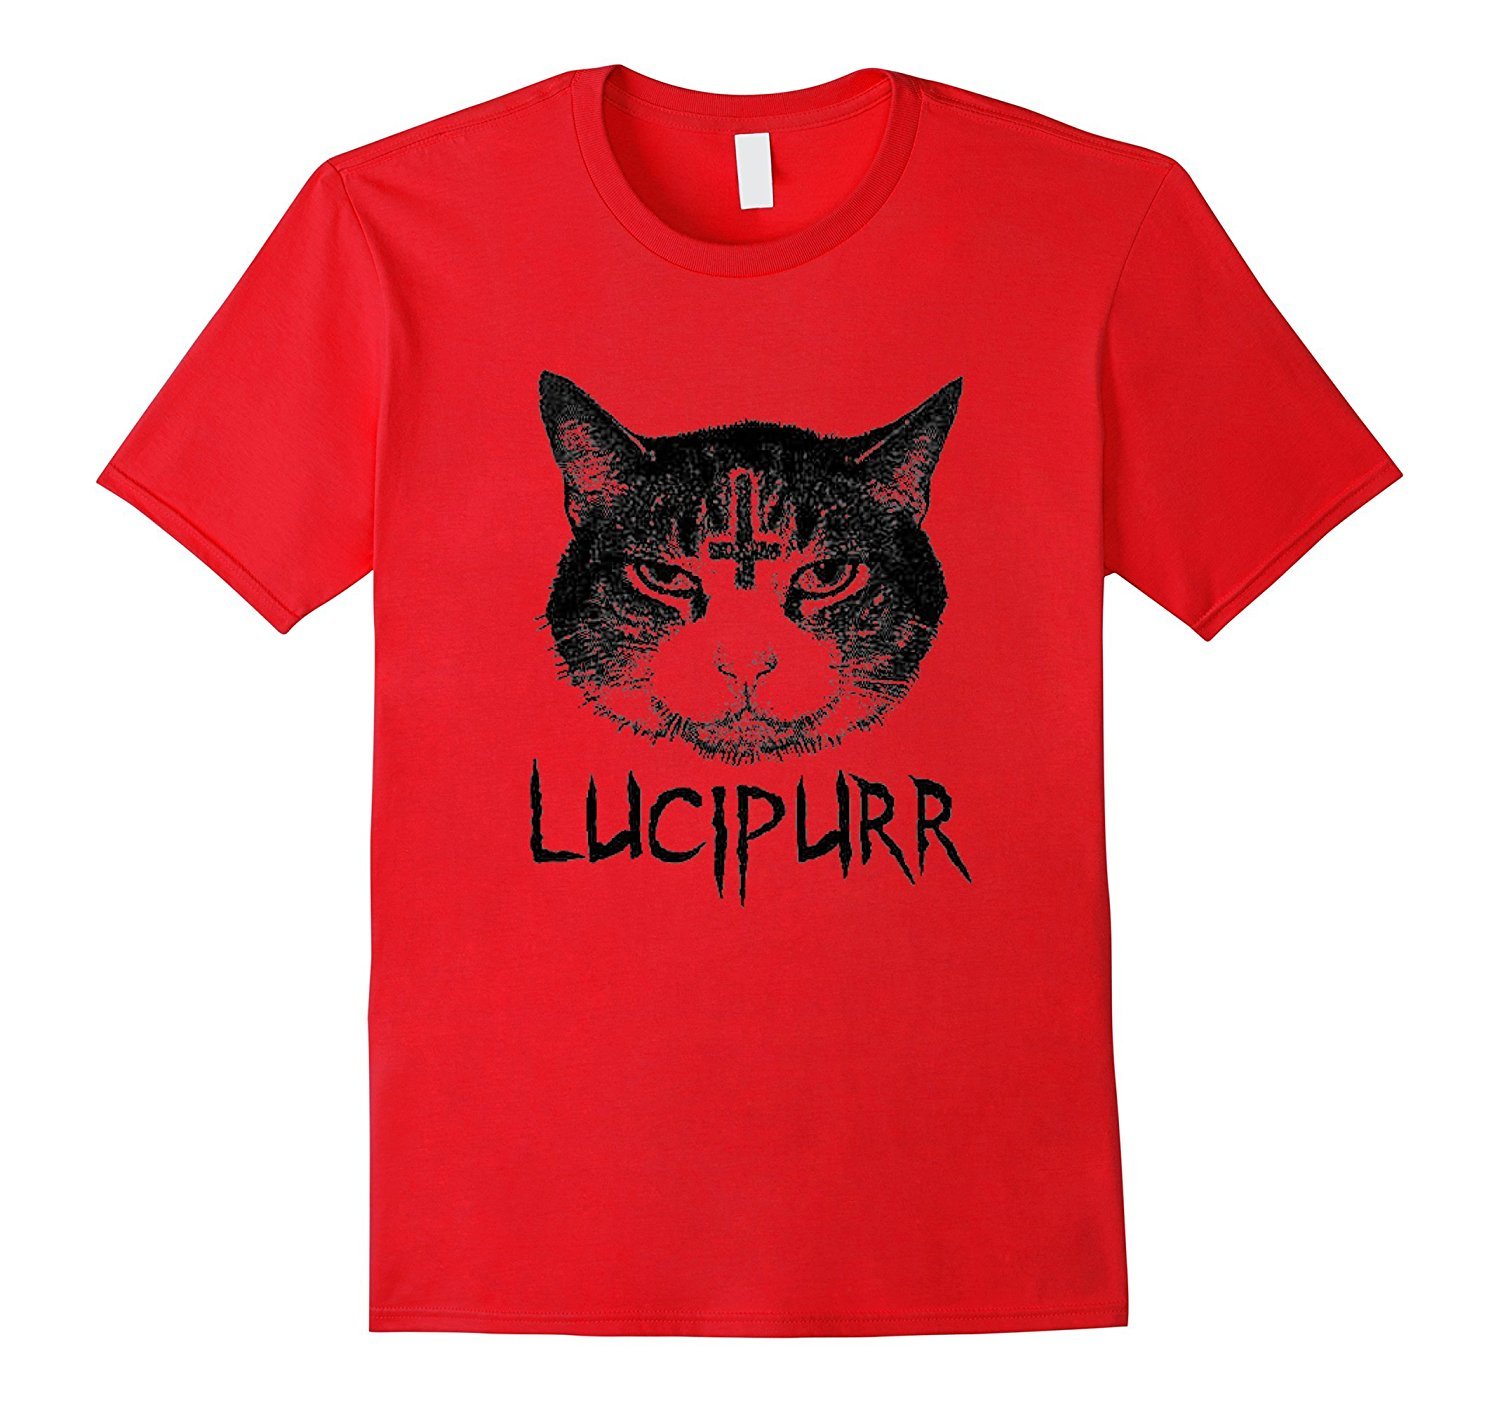 Amazing Shirt - Lucipurr Satan Funny Cat Men - T-Shirts, Tank Tops